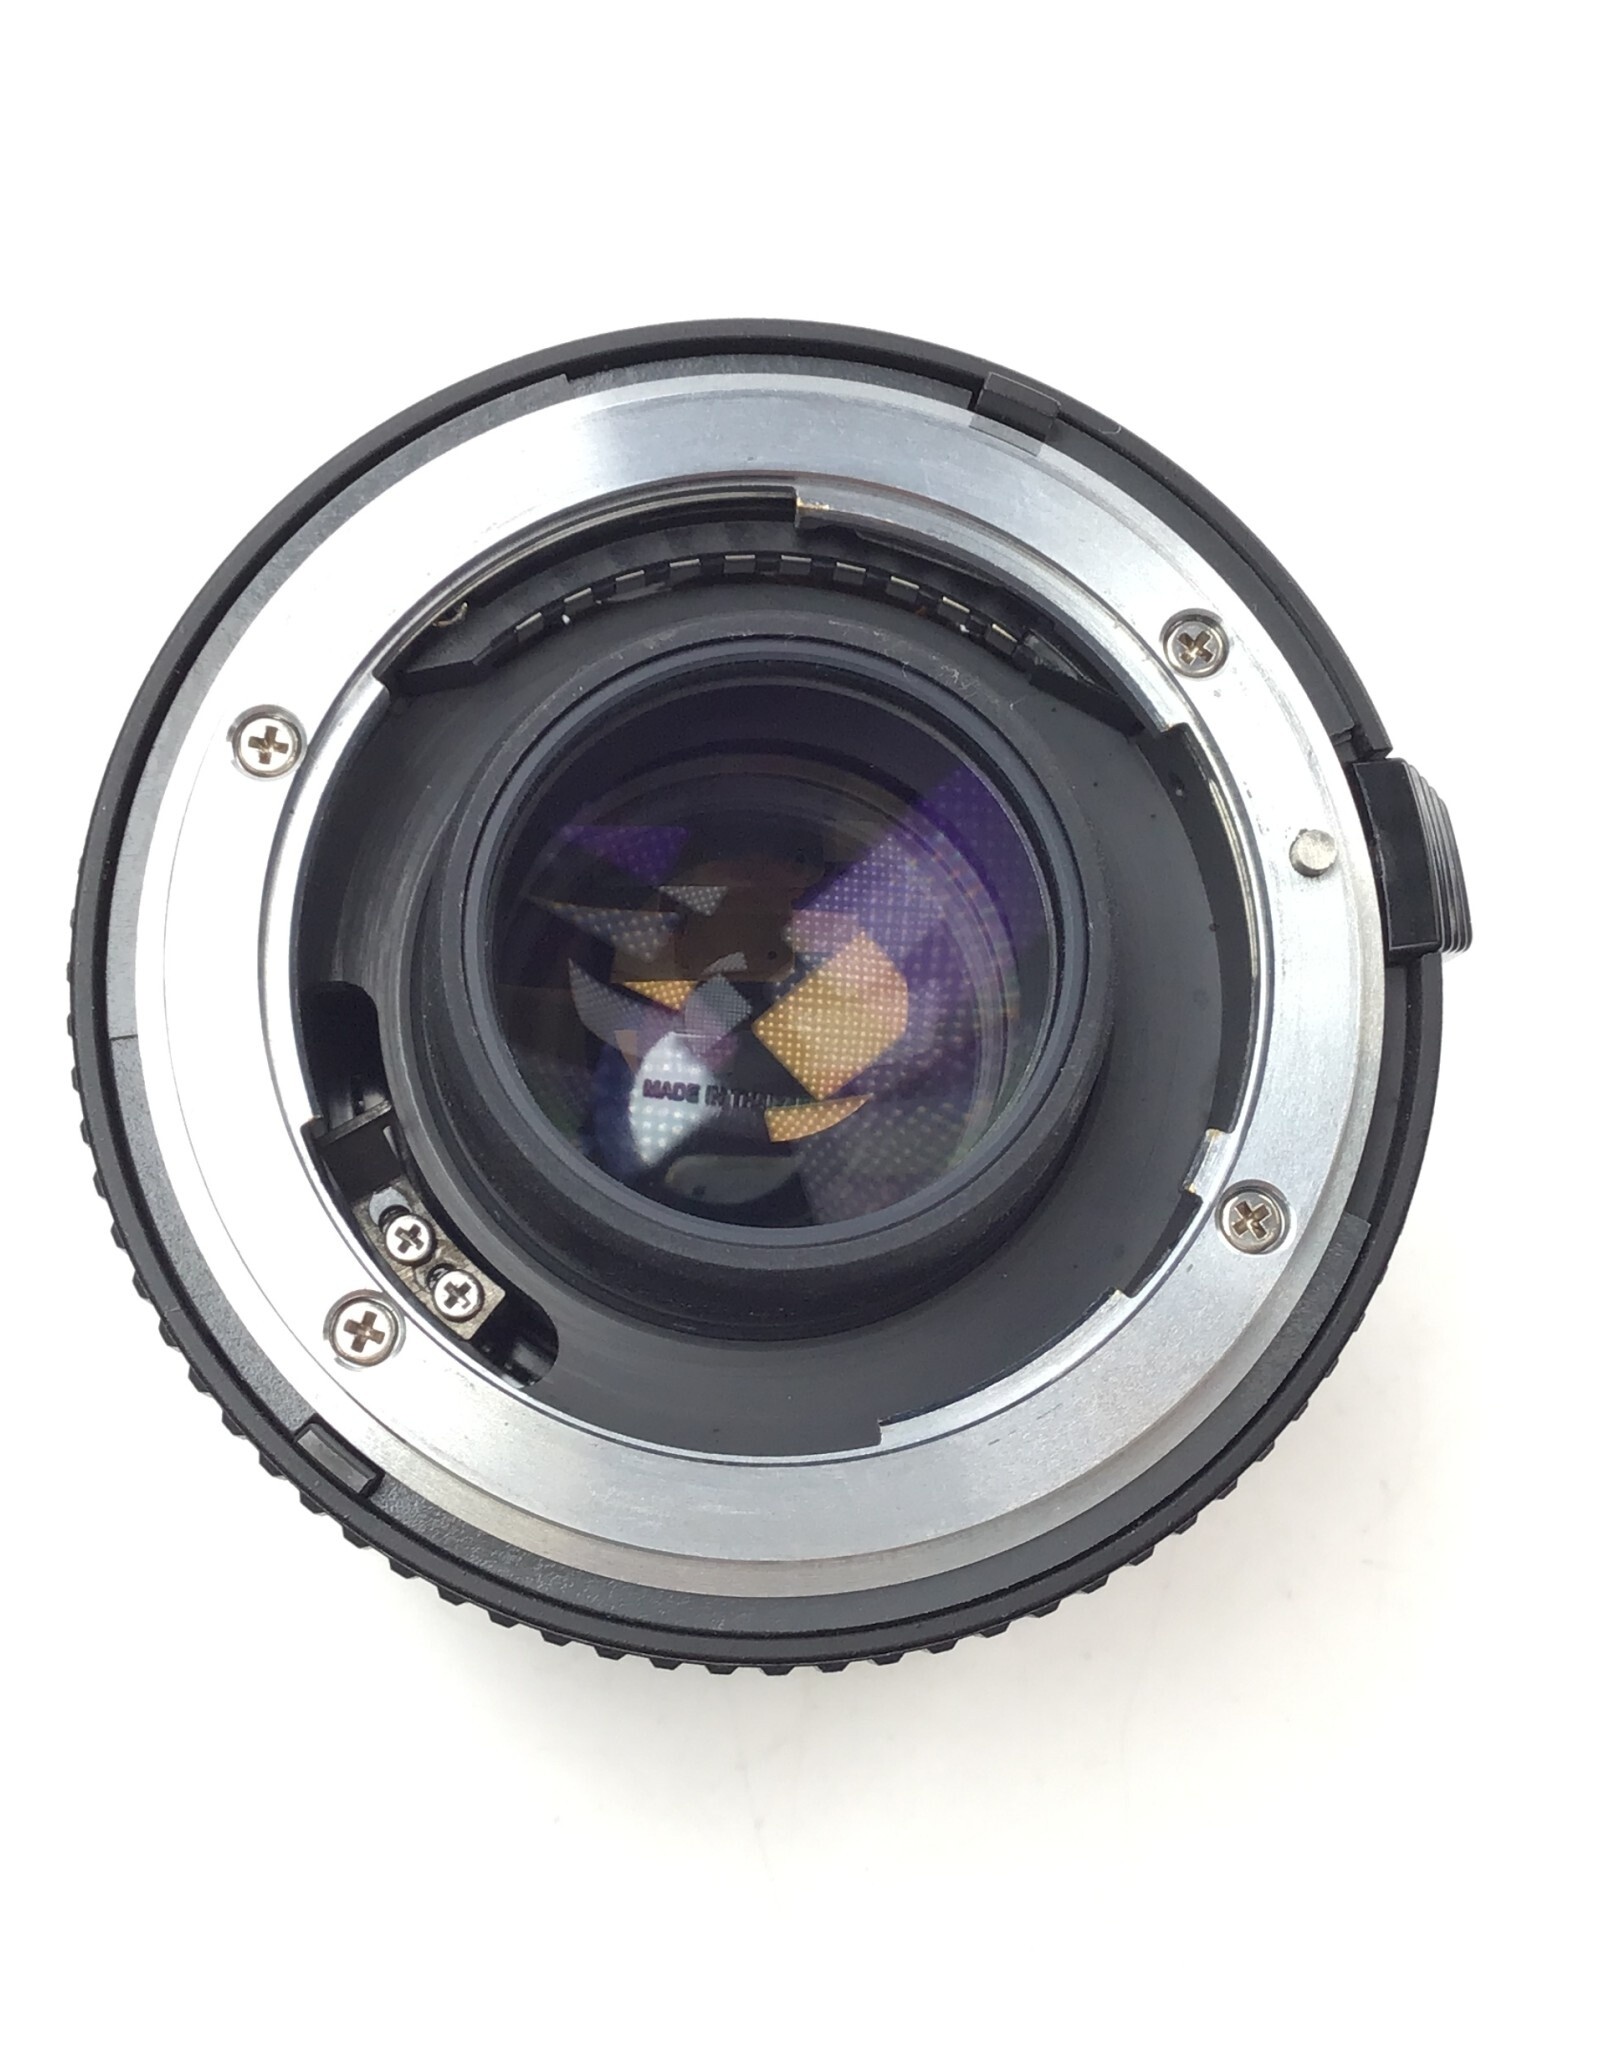 NIKON Nikon AF-S Teleconverter Lens TC-17E II Used Good